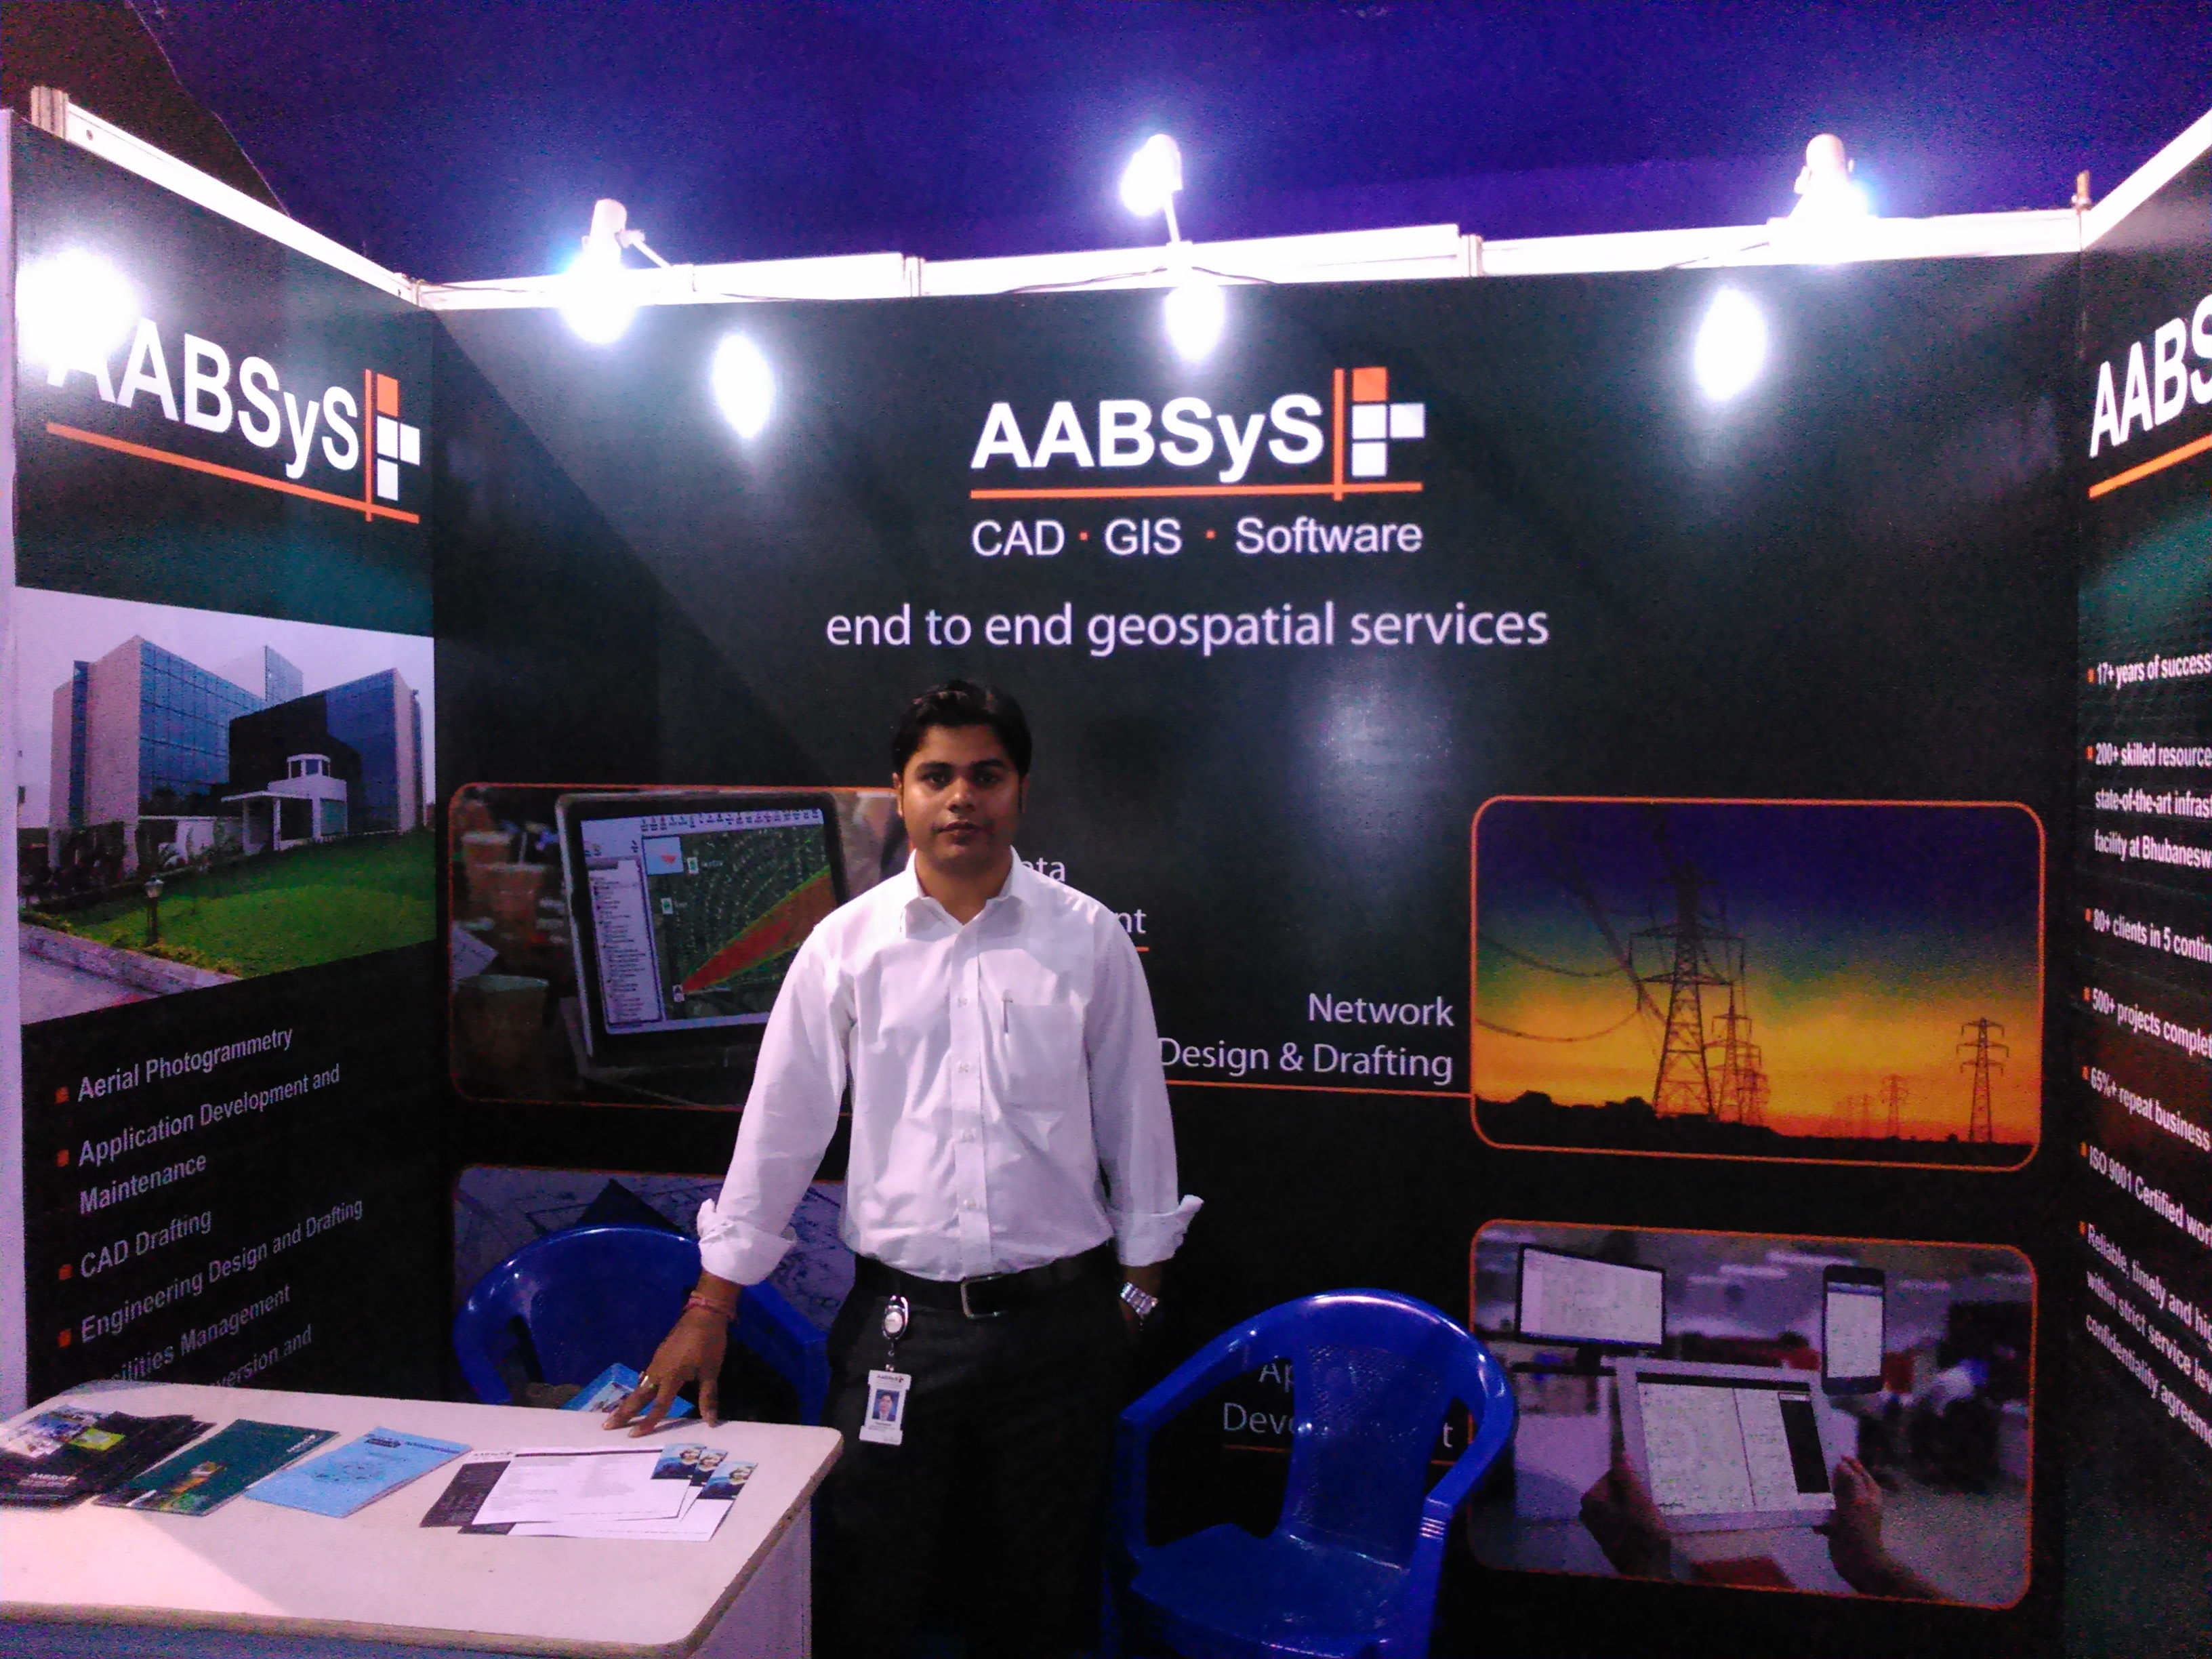 AABSyS IT participates in Enterprise Odisha 2015